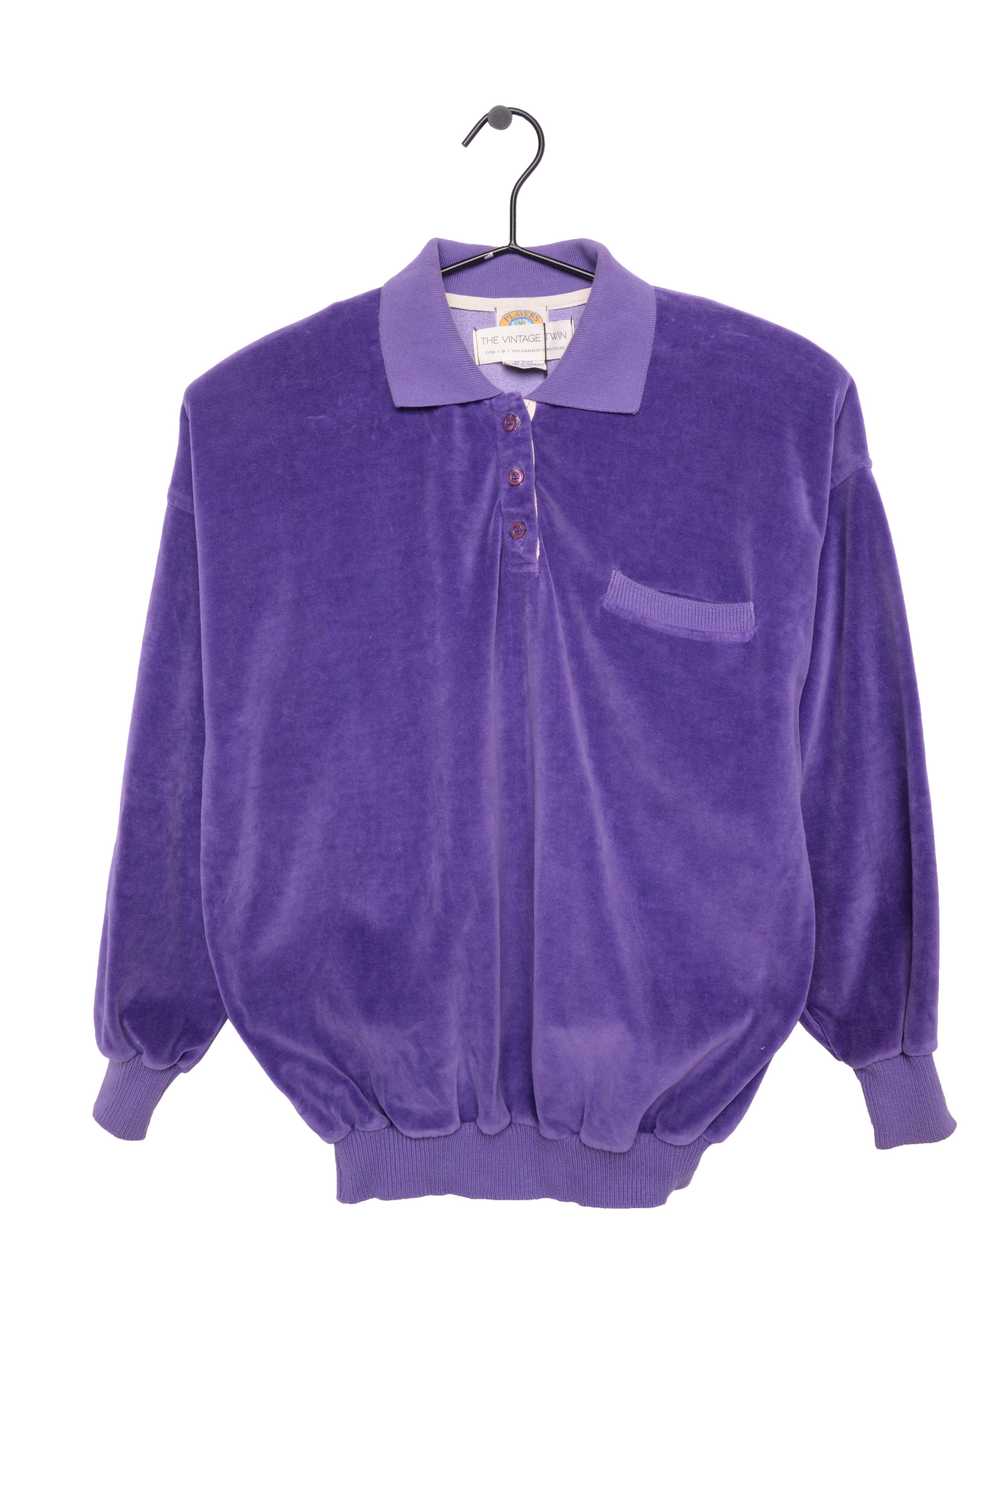 1990s Purple Velour Shirt - image 1